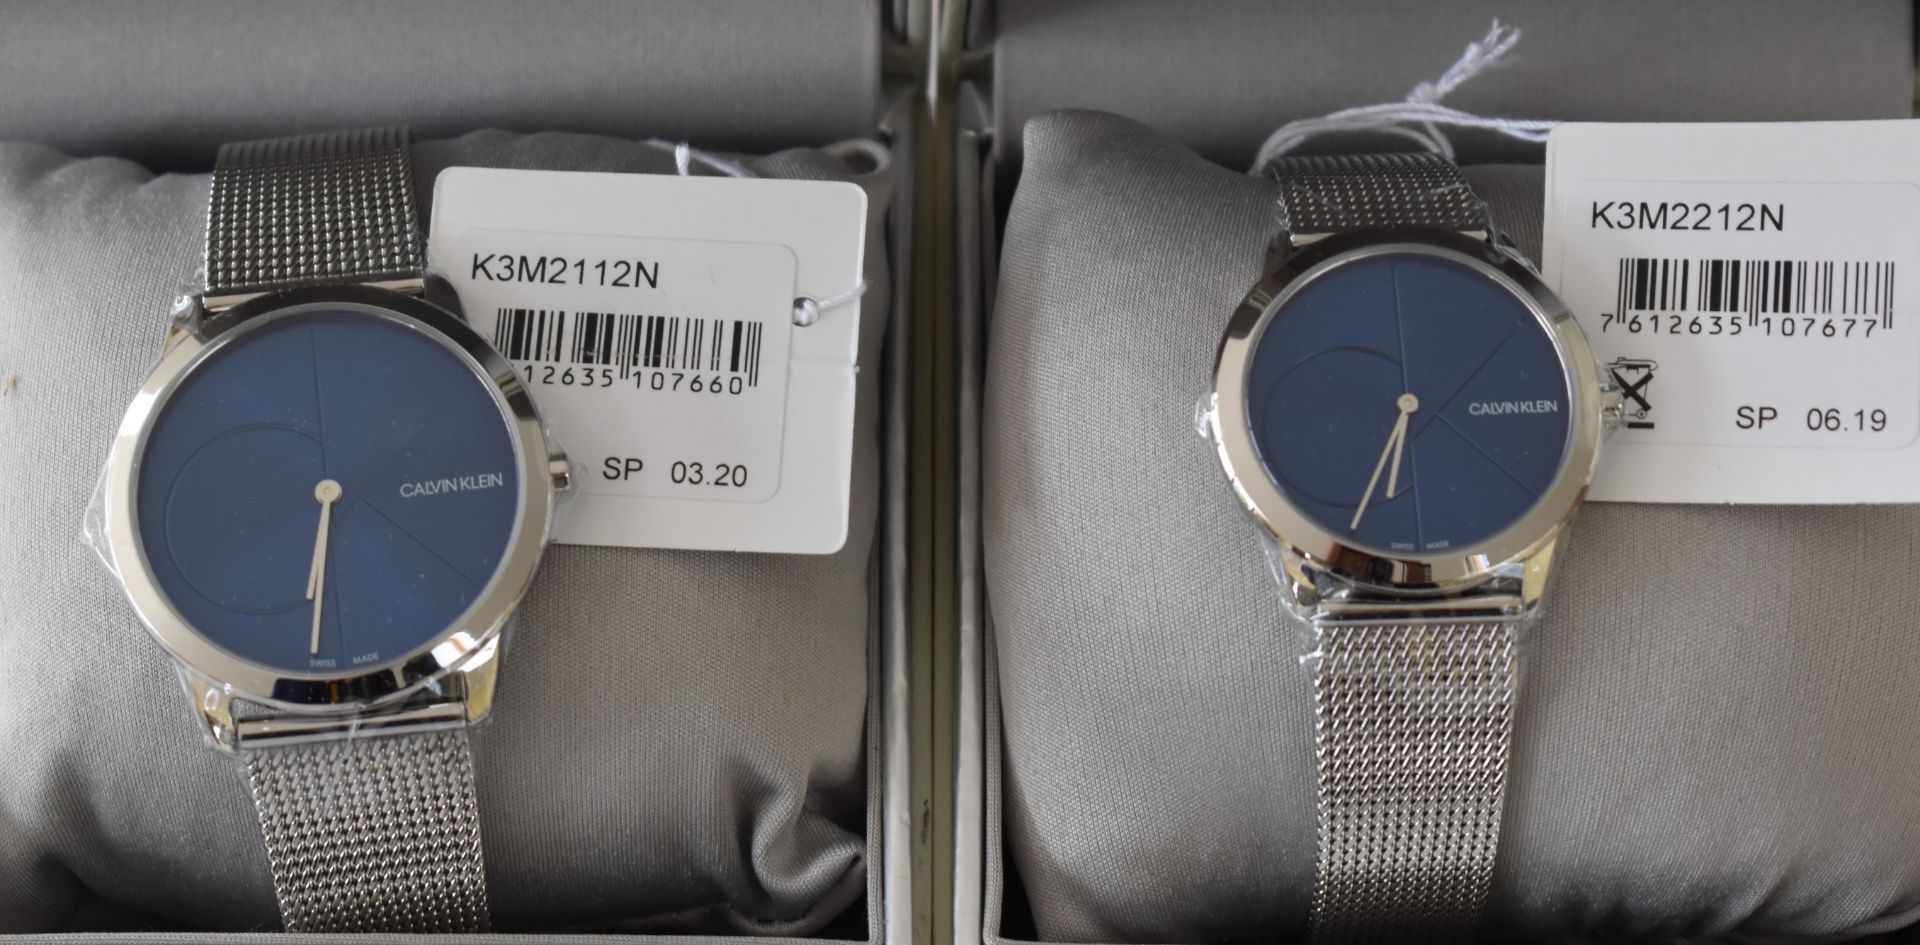 Calvin klein His/Her K3M2112N/K3M2212N Watches - Image 2 of 2